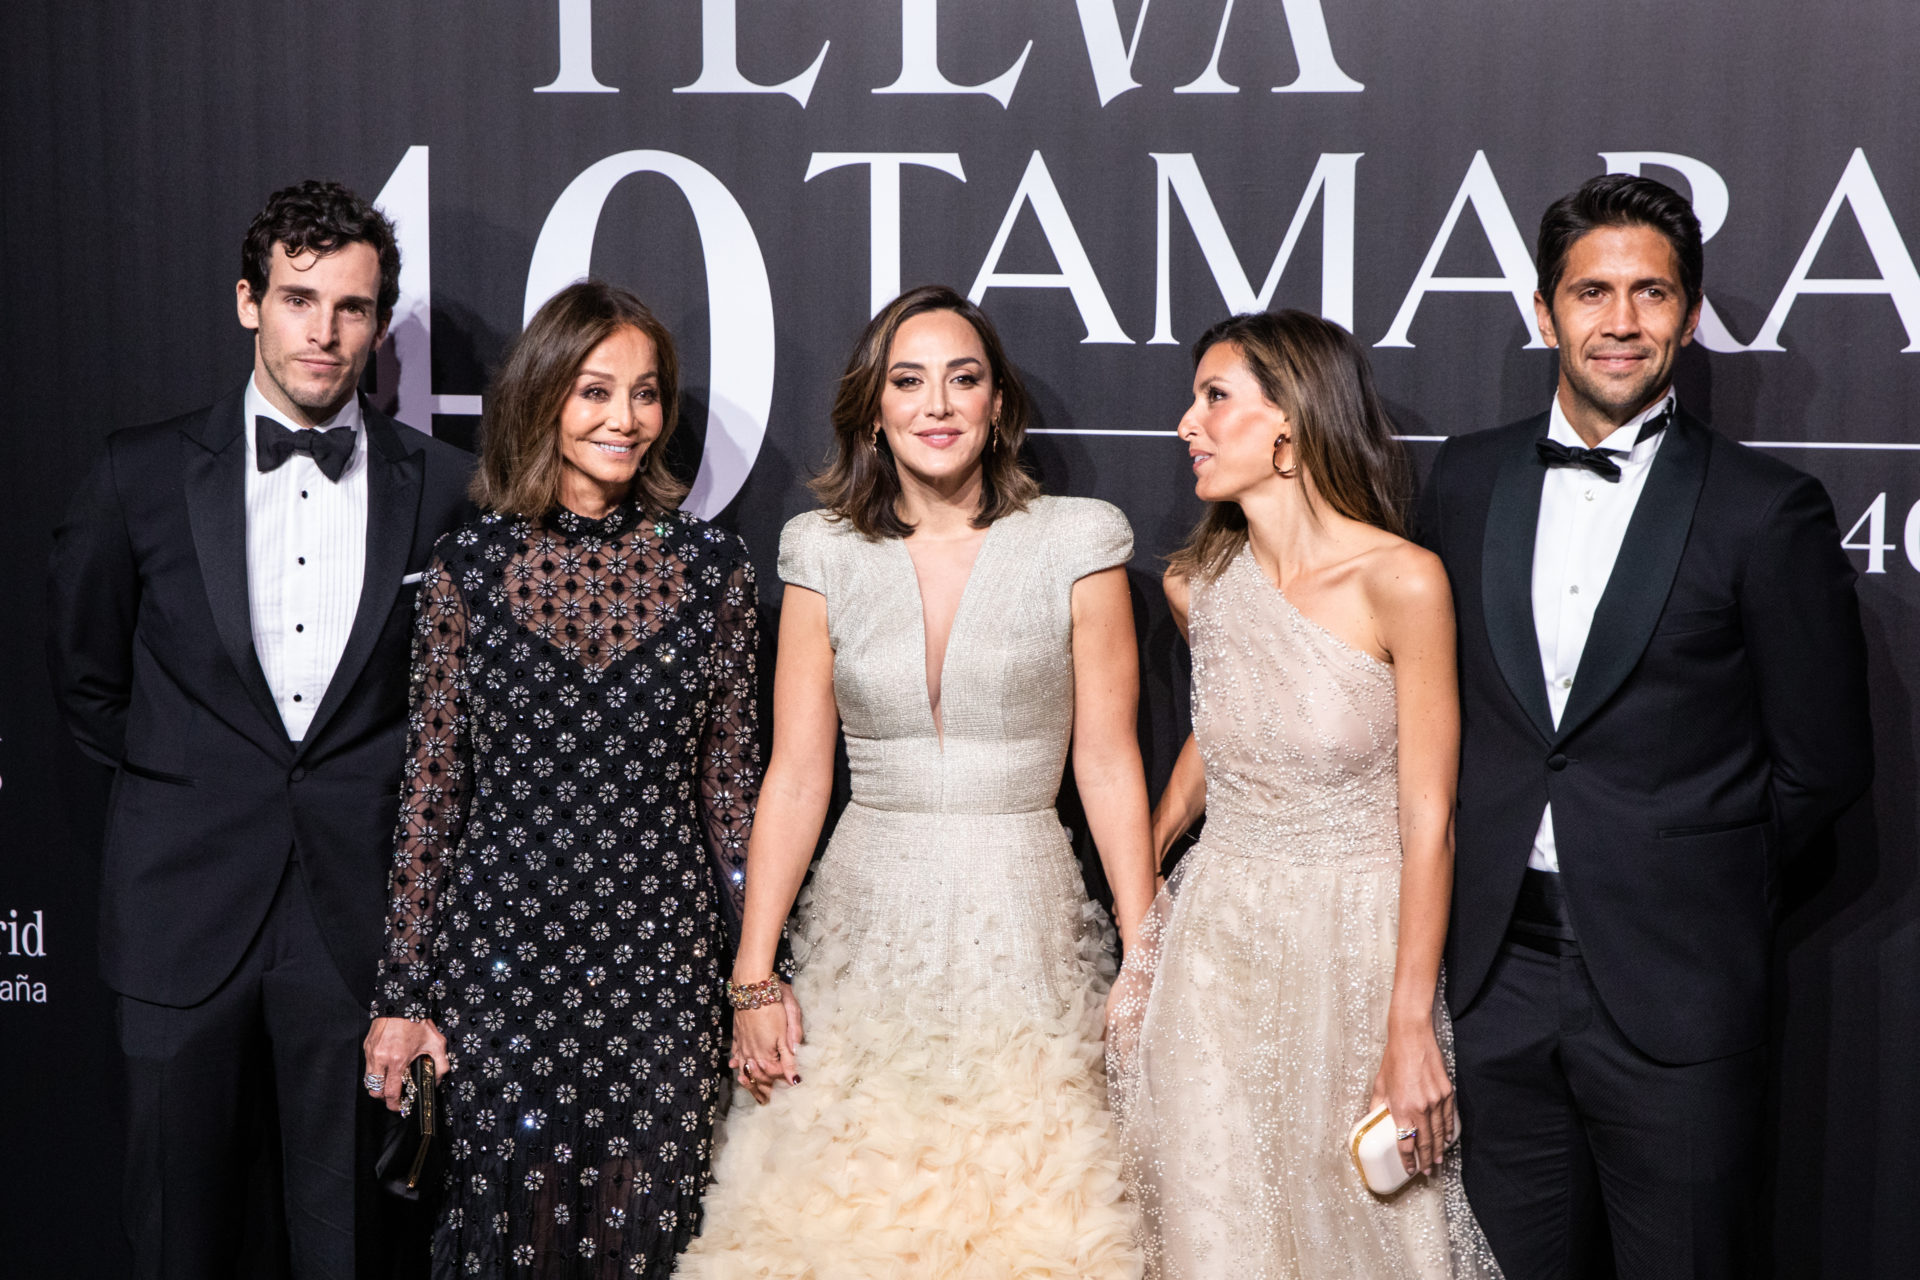 Tamara Falco Celebrates Her 40th Birthday With Telva Magazine In Madrid